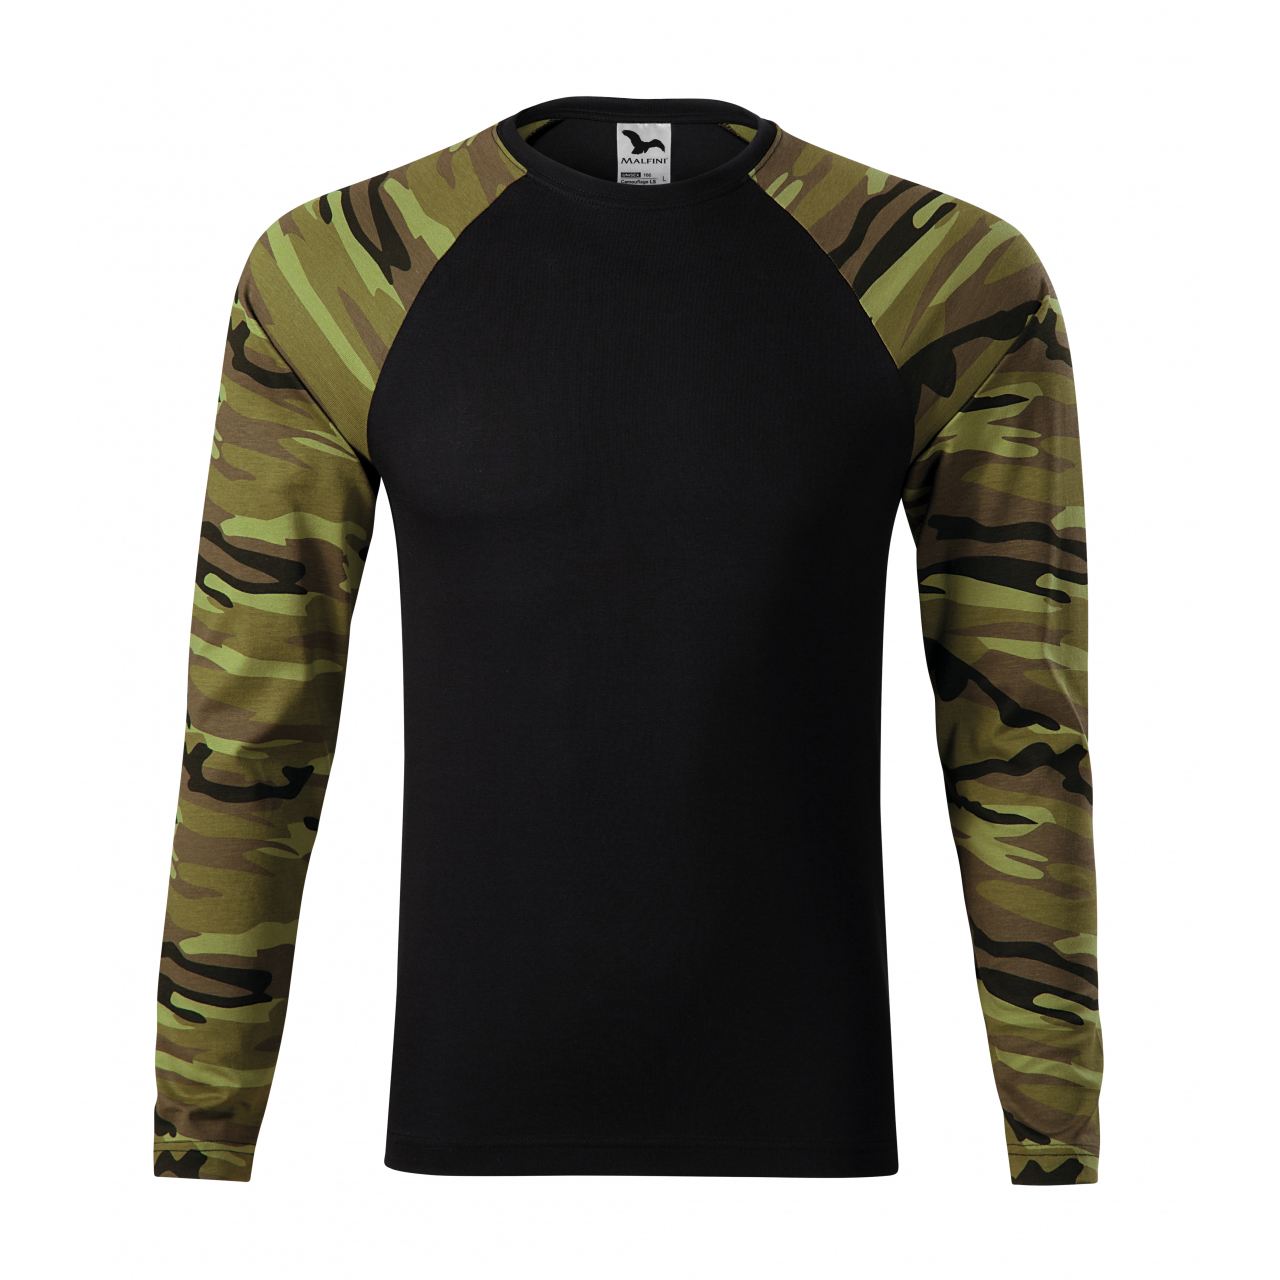 Tričko unisex Malfini Camouflage dlouhý rukáv - černé-český vzor, XL